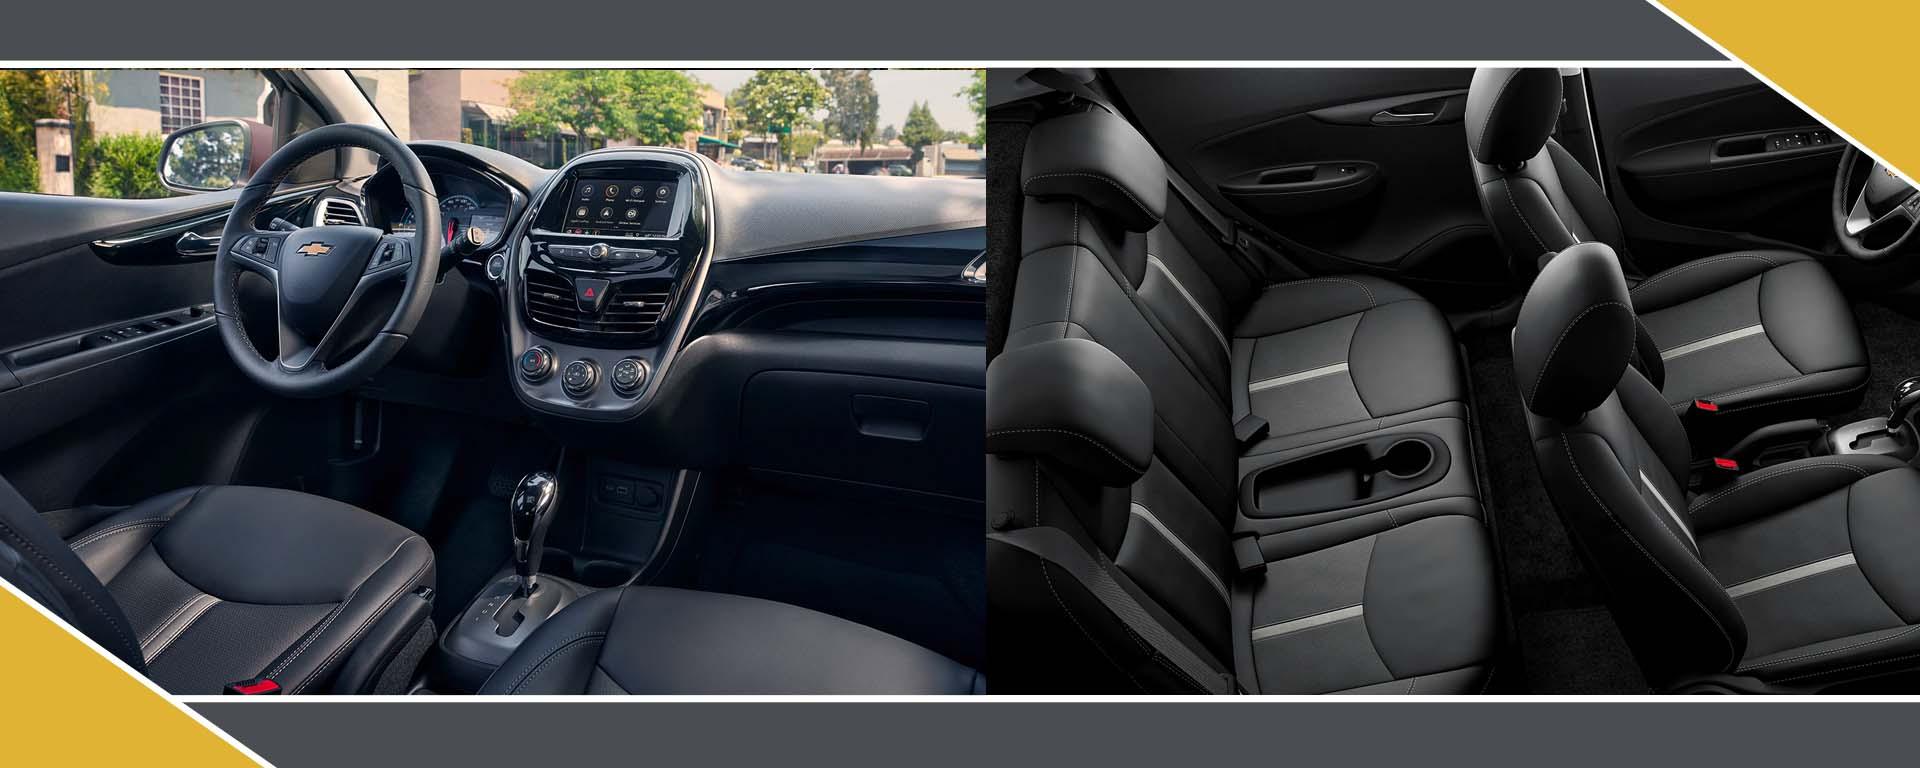 2020 Chevy Spark interior